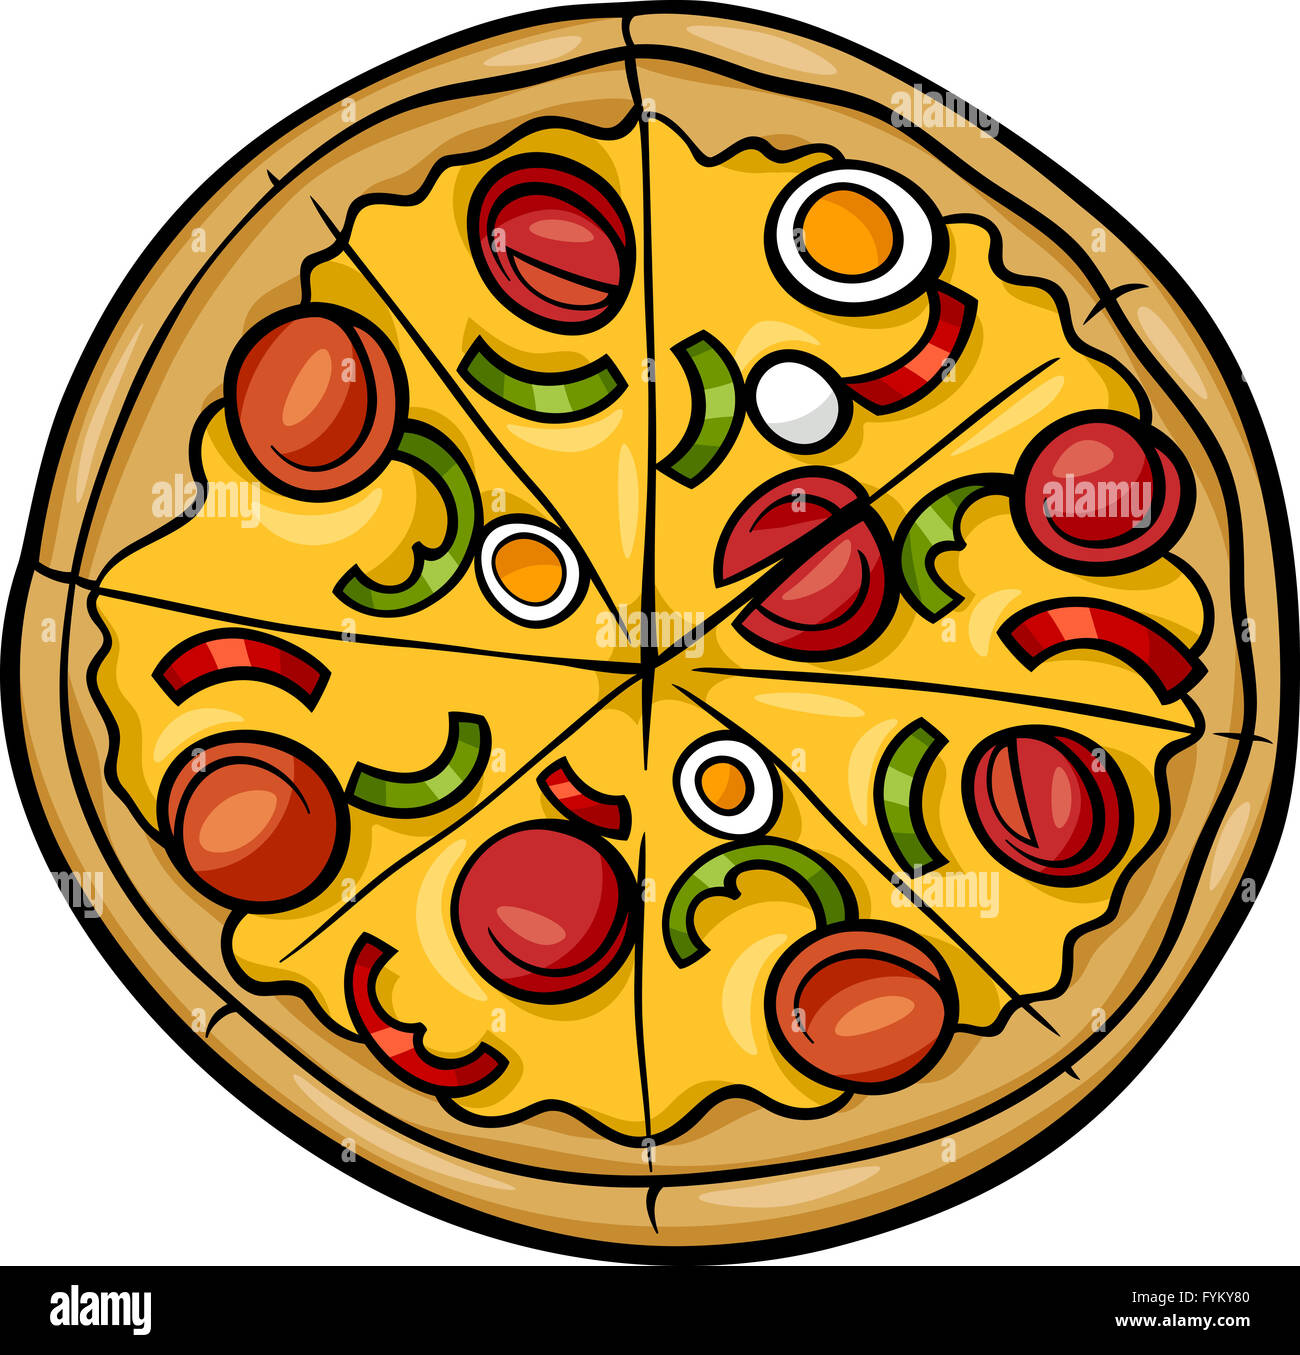 italian pizza cartoon illustration Stock Photo - Alamy